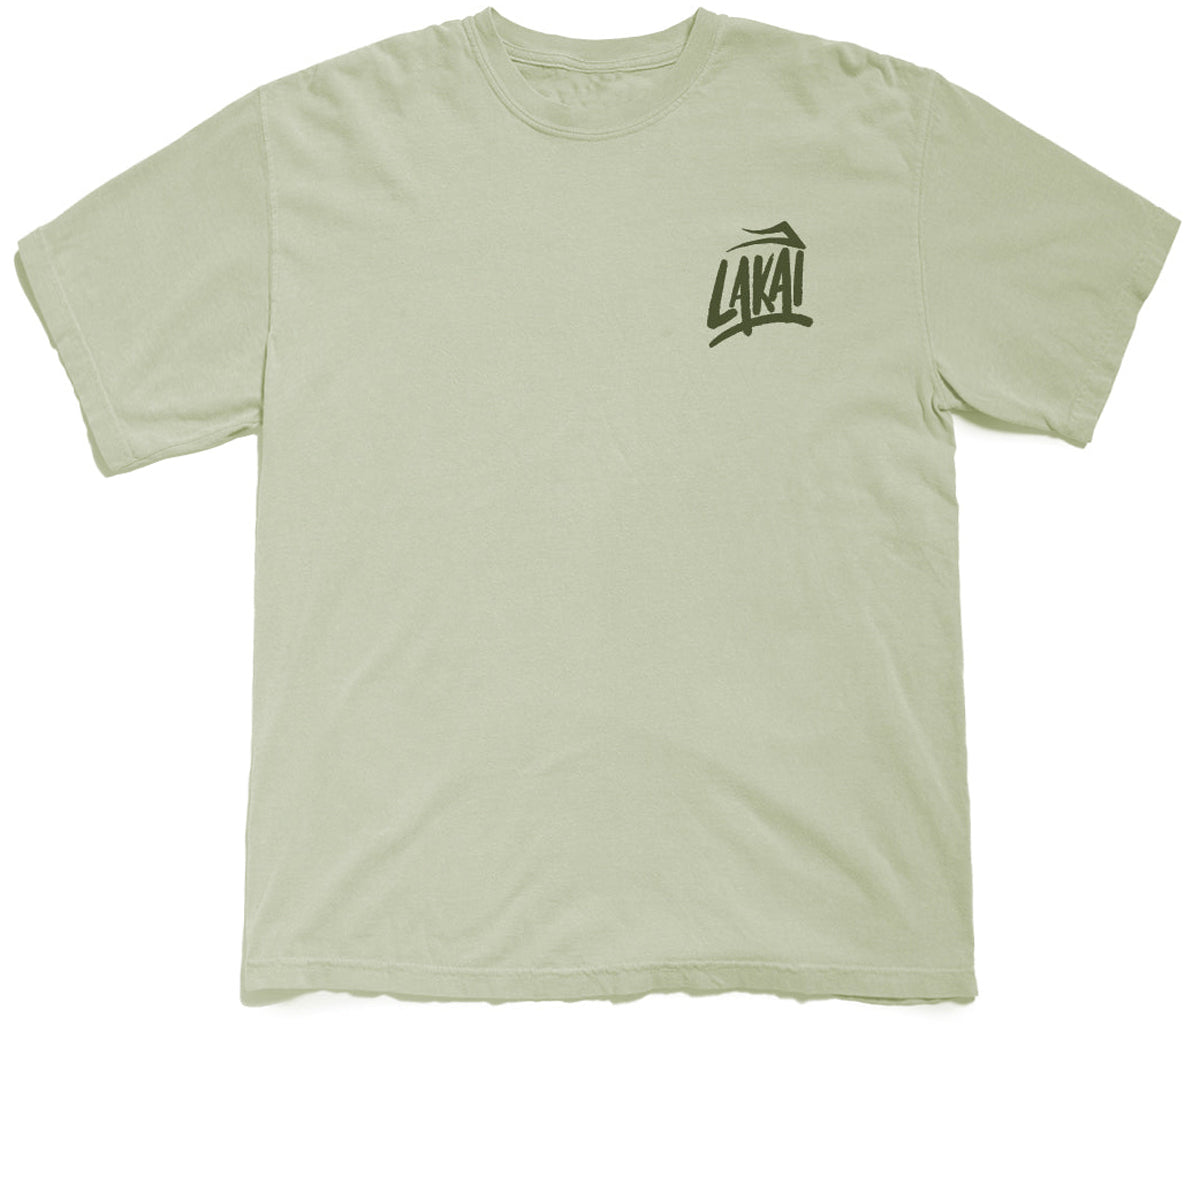 Lakai Brush Garment Dyed T-Shirt - Bay Green image 1